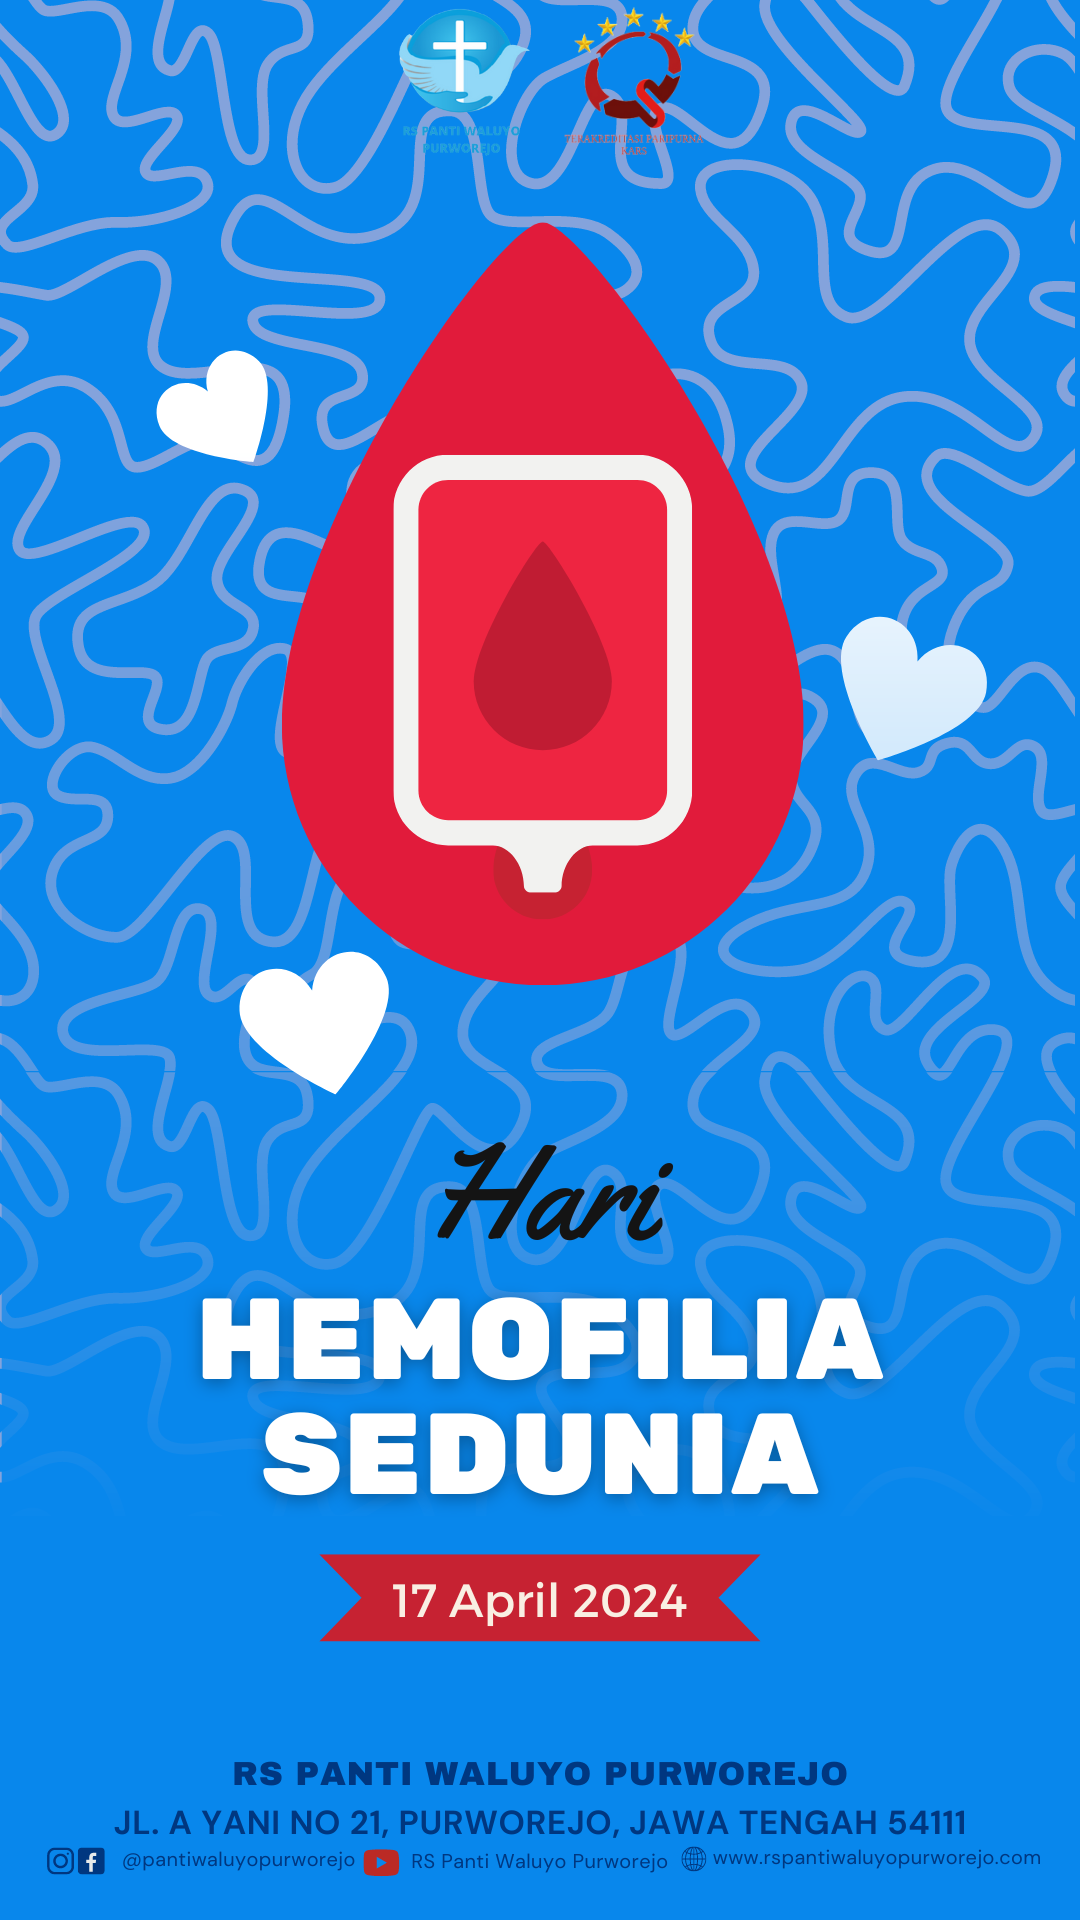 Hemofilia : Pembekuan Darah Genetik